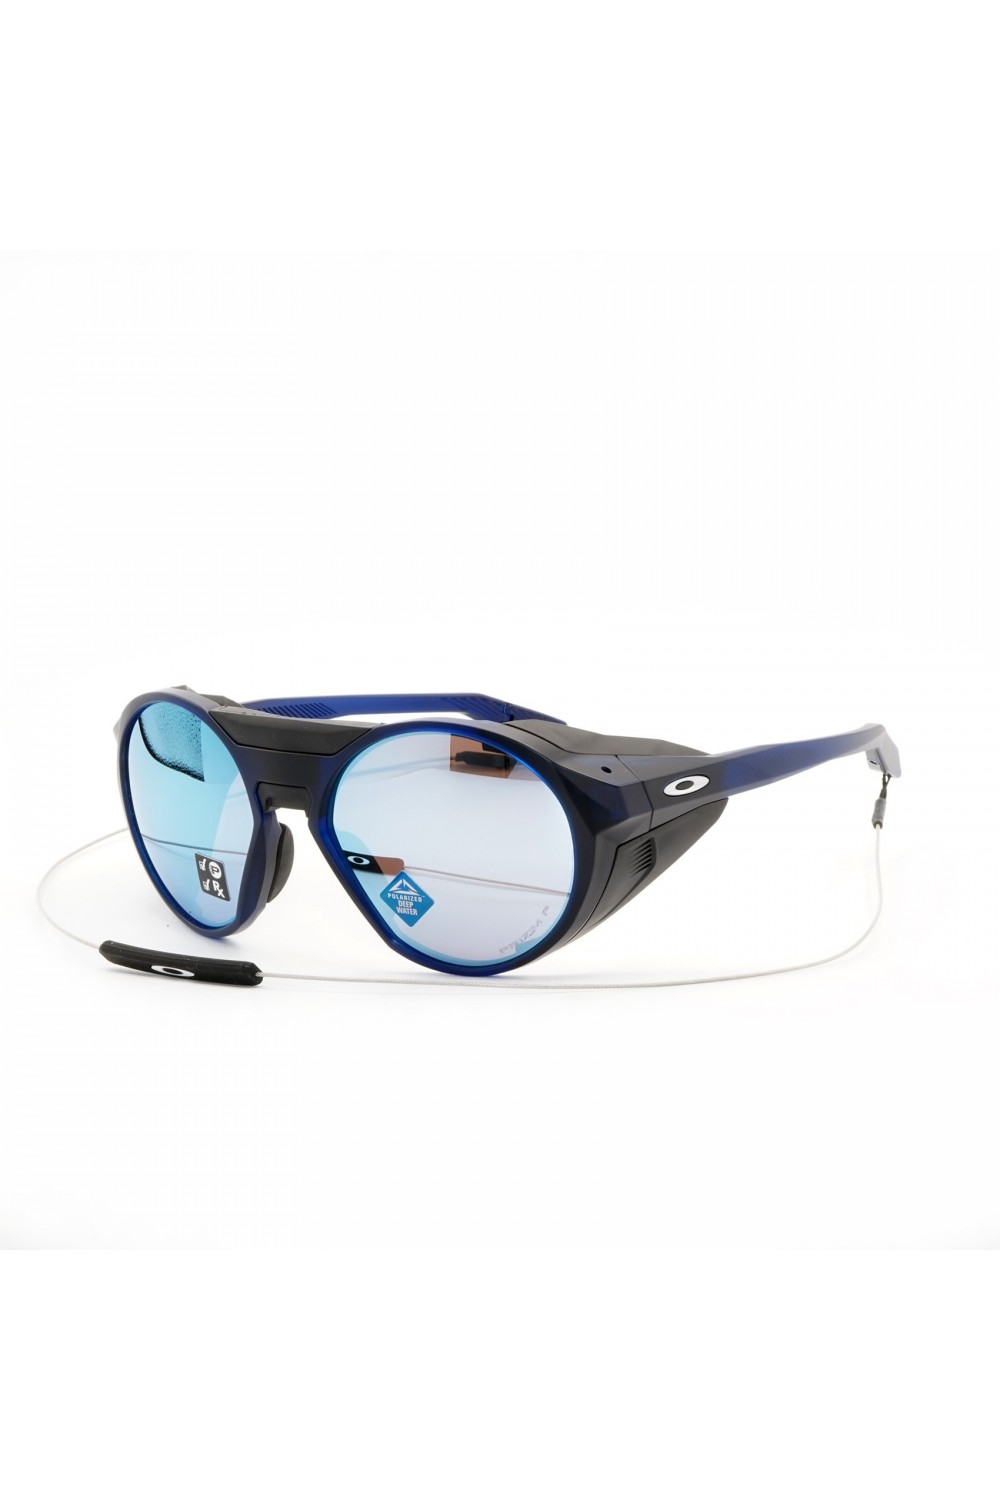 Oakley - Occhiali da sole tondi sportivi avvolgenti per uomo blu - 9440 0556